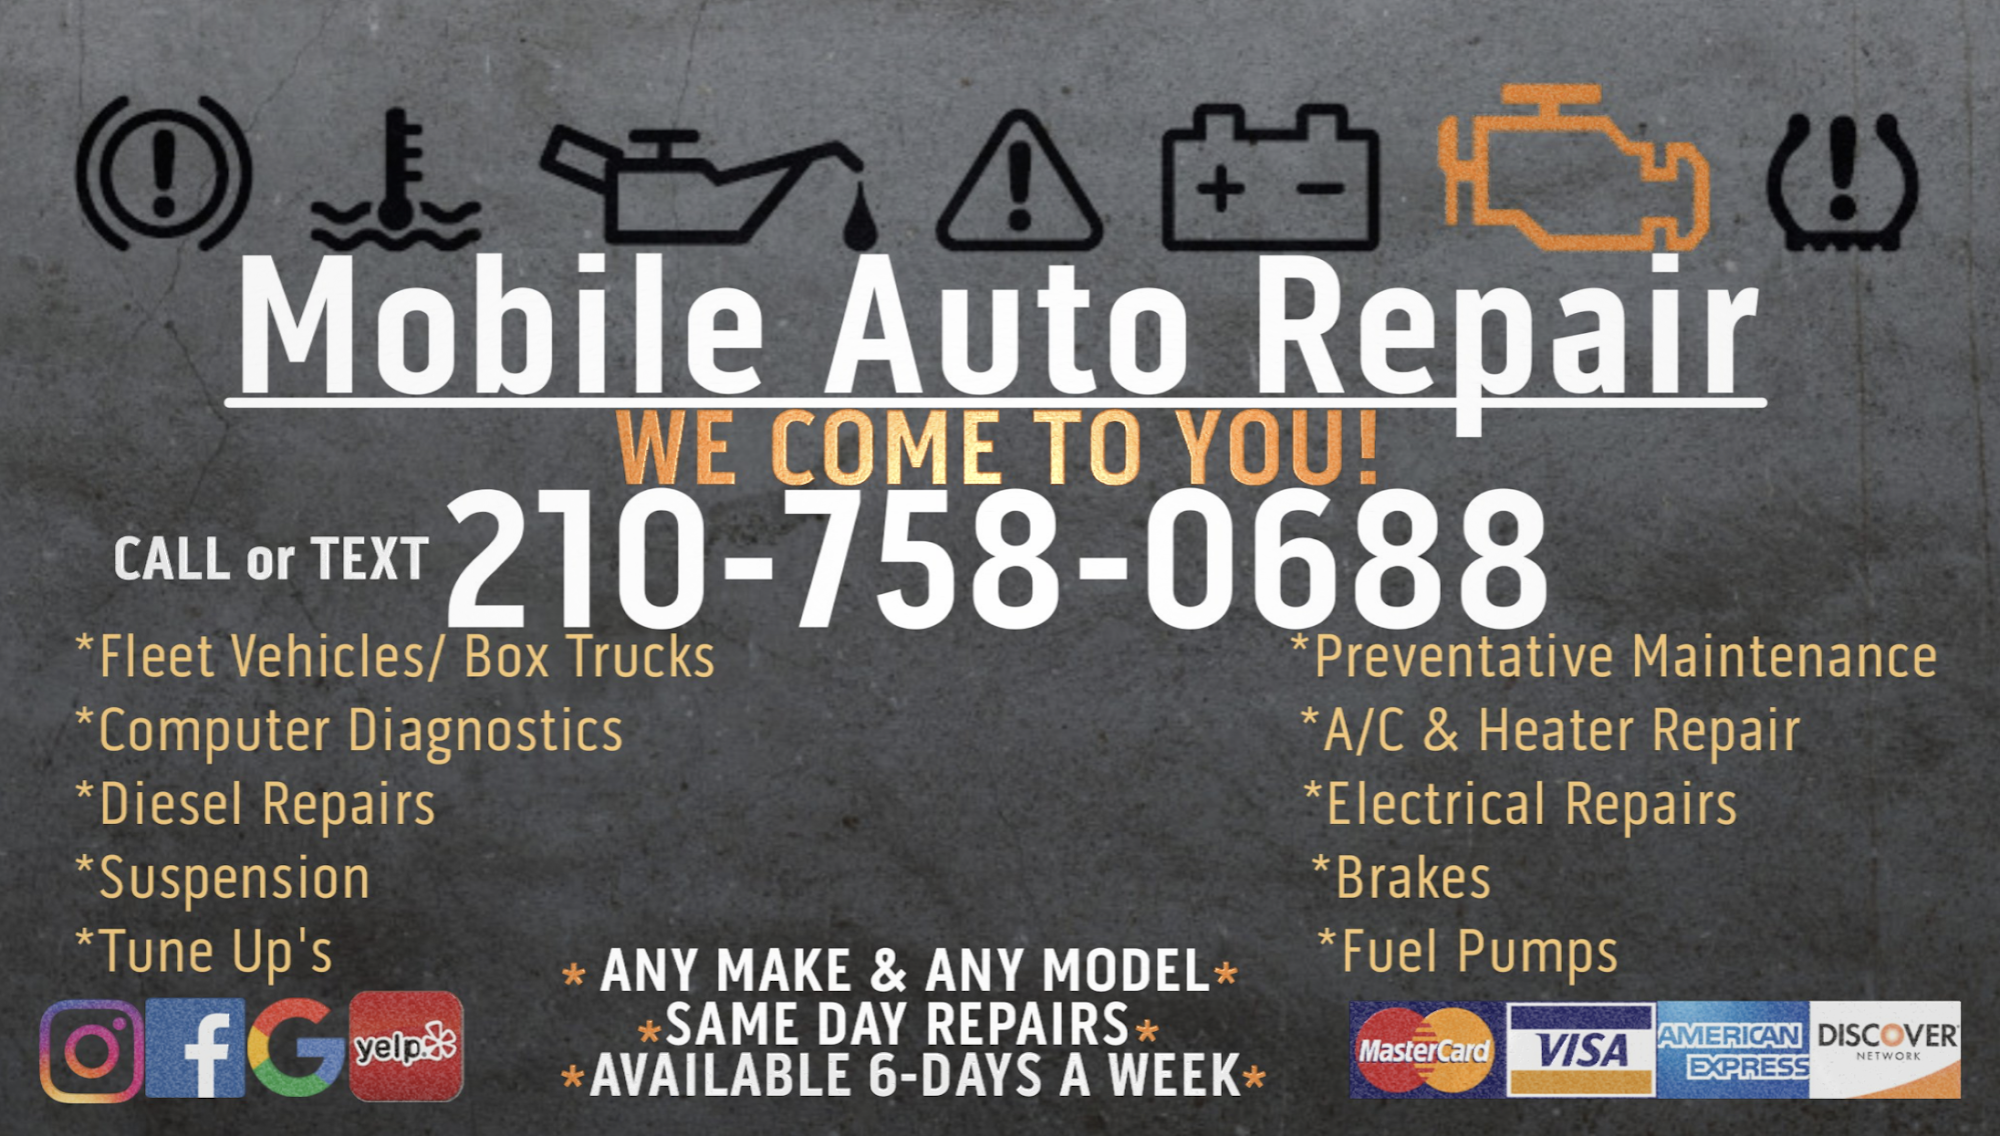 Reliable Fleet & Mobile Auto Repair